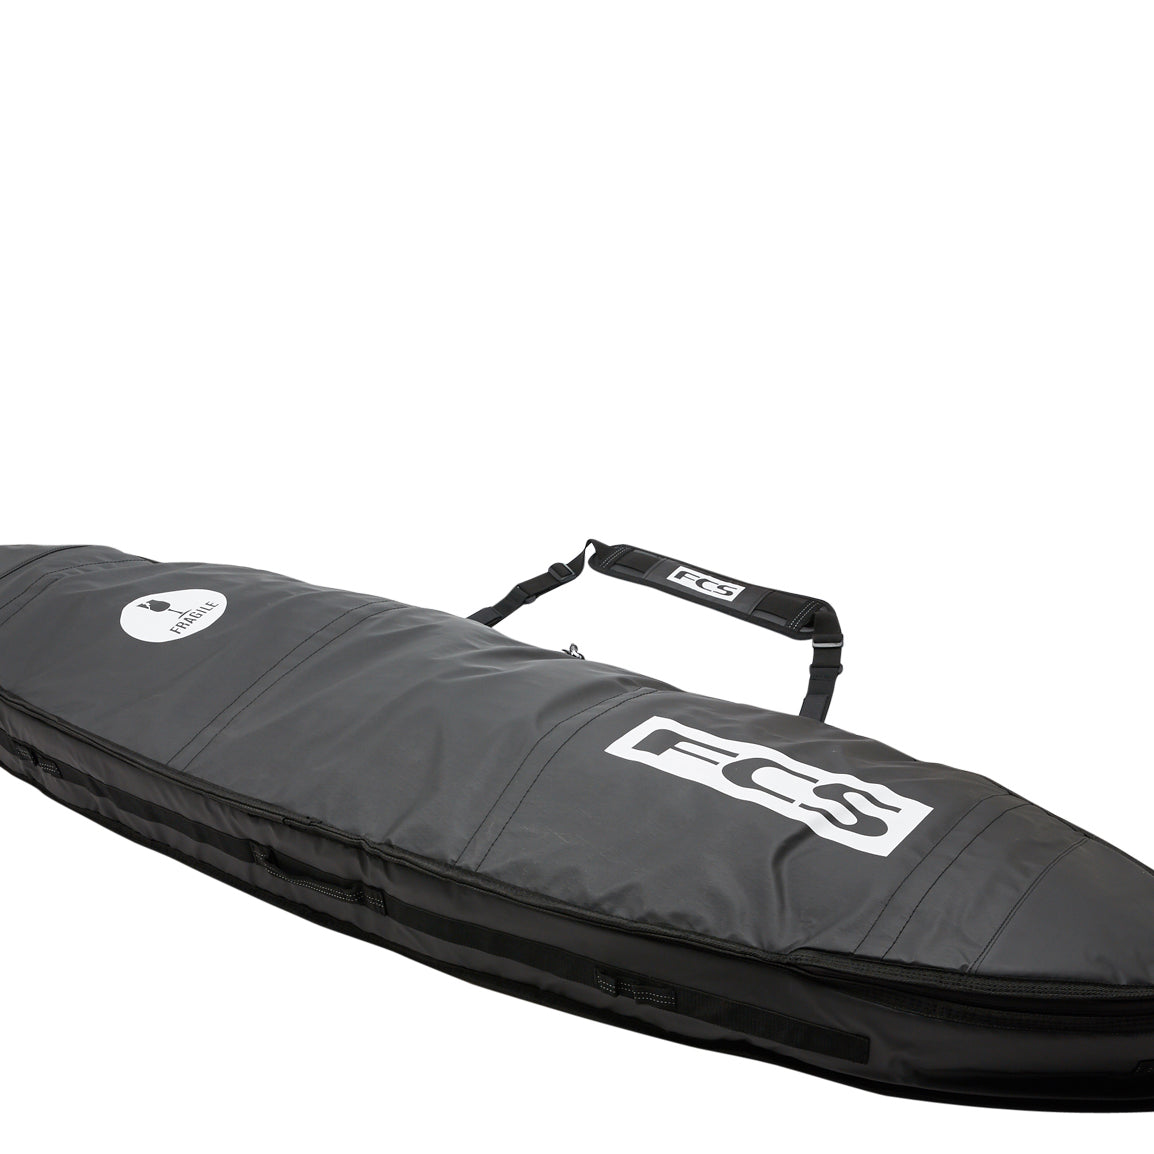 FCS Travel 2 All Purpose Boardbag Black-Grey 6ft7in